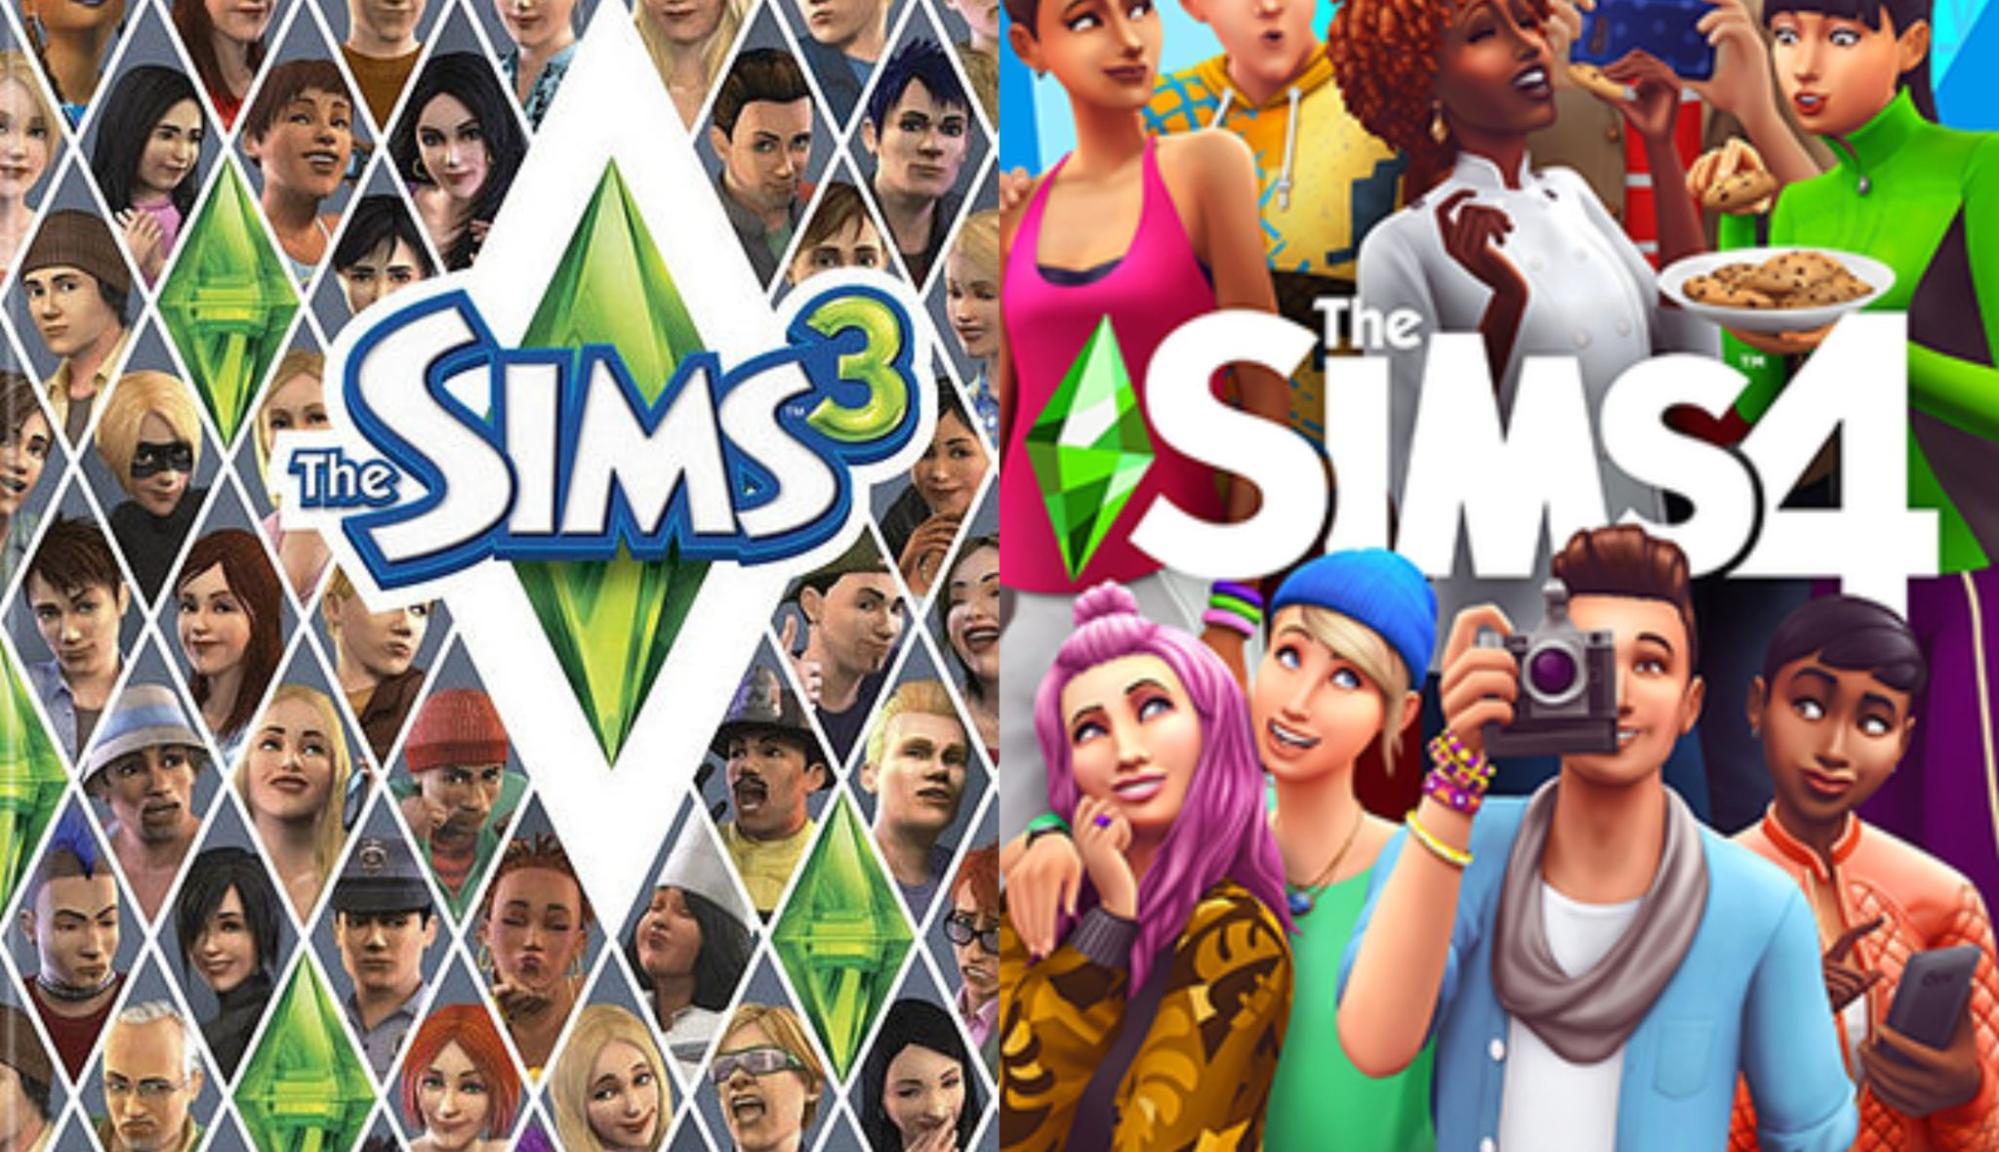 Sims 3 vs Sims 4 - Comparing the Life Simulators!